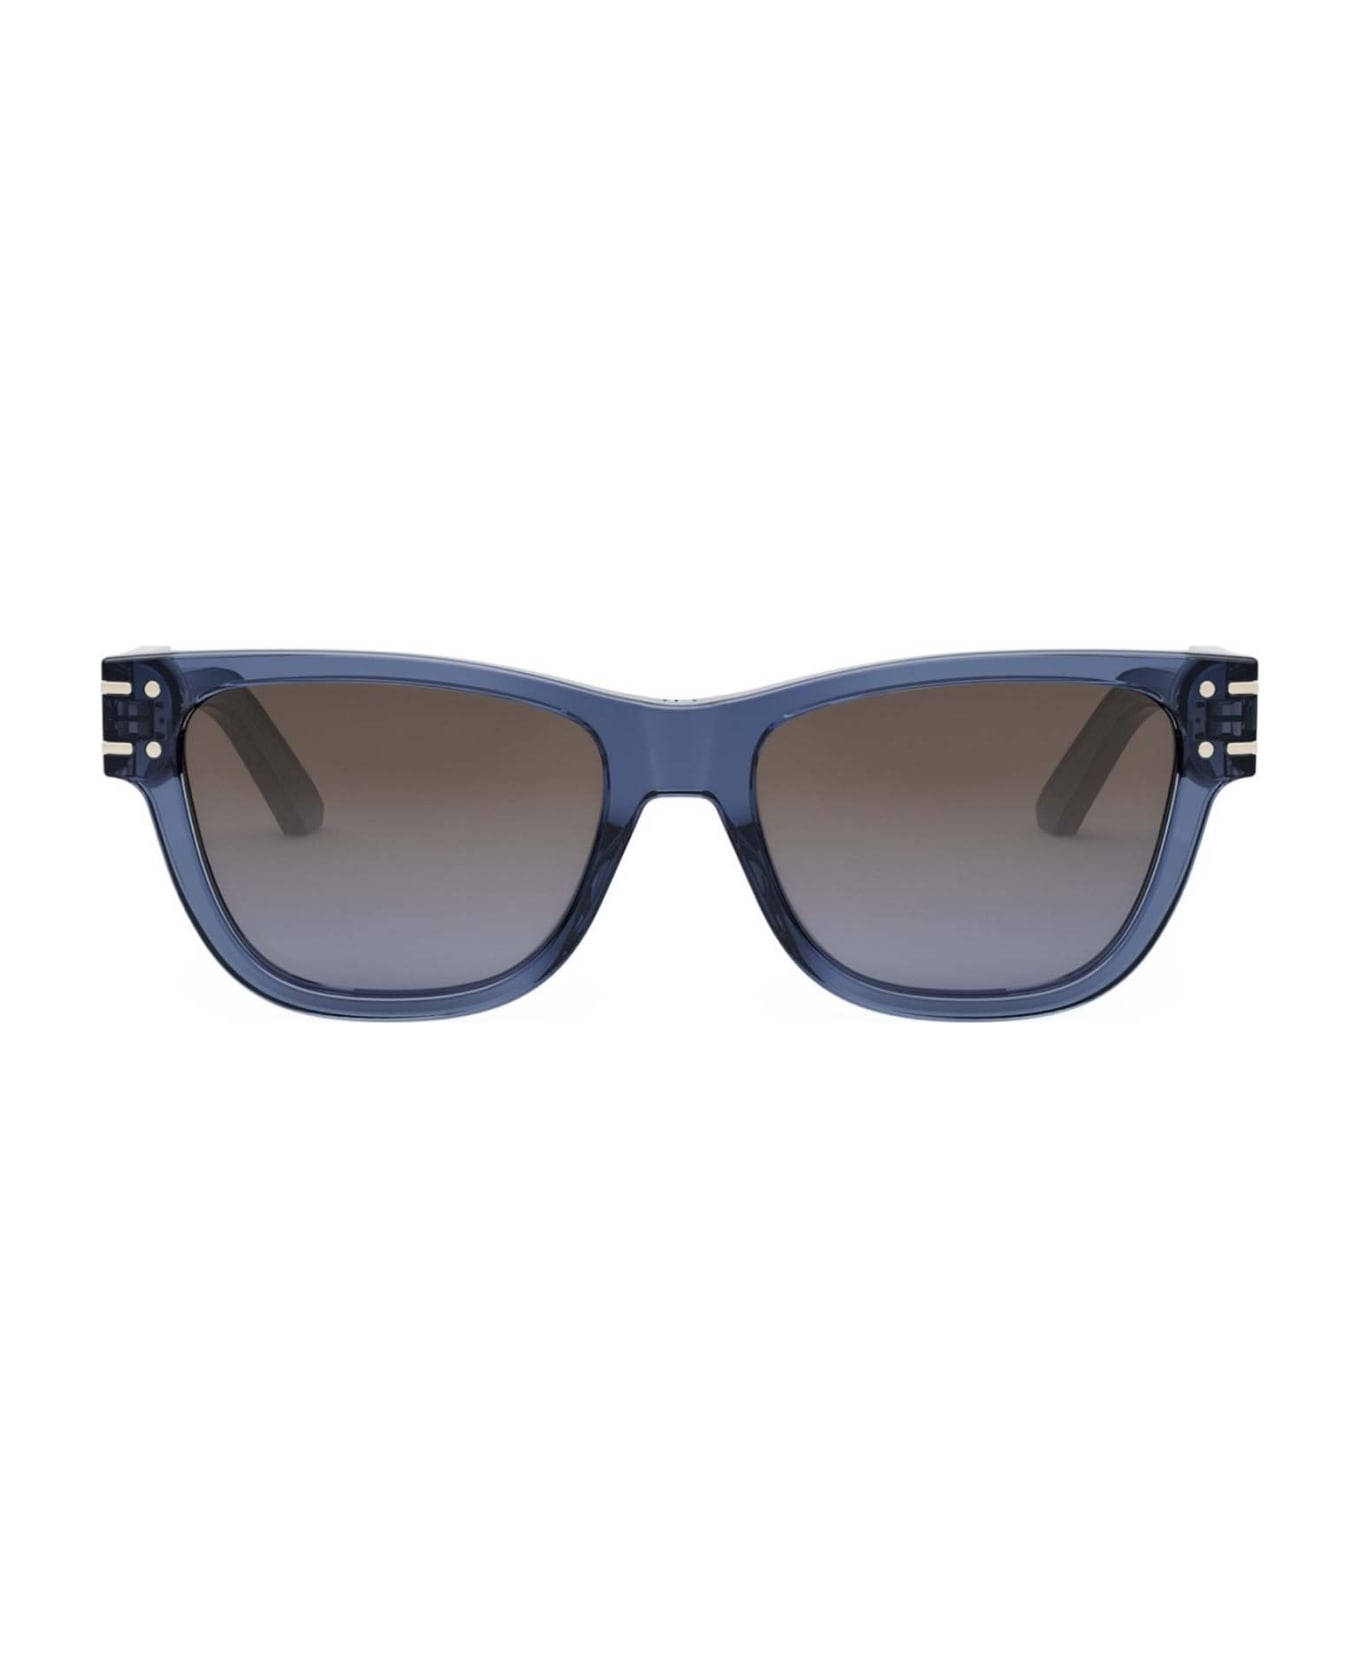 Dior Eyewear Sunglasses - Blu/Marrone sfumata サングラス